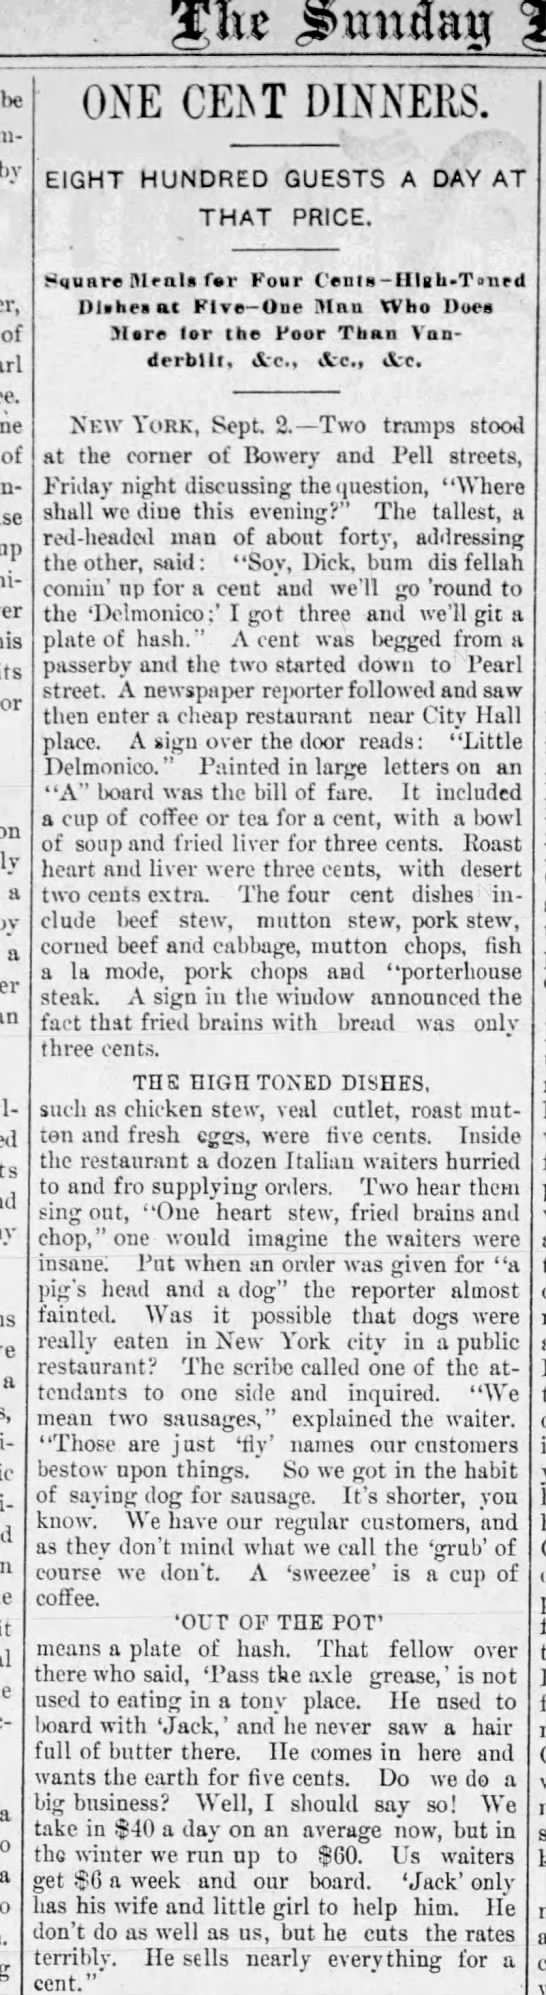 "Dog" for "sausage"--hot dog? (1885). - 